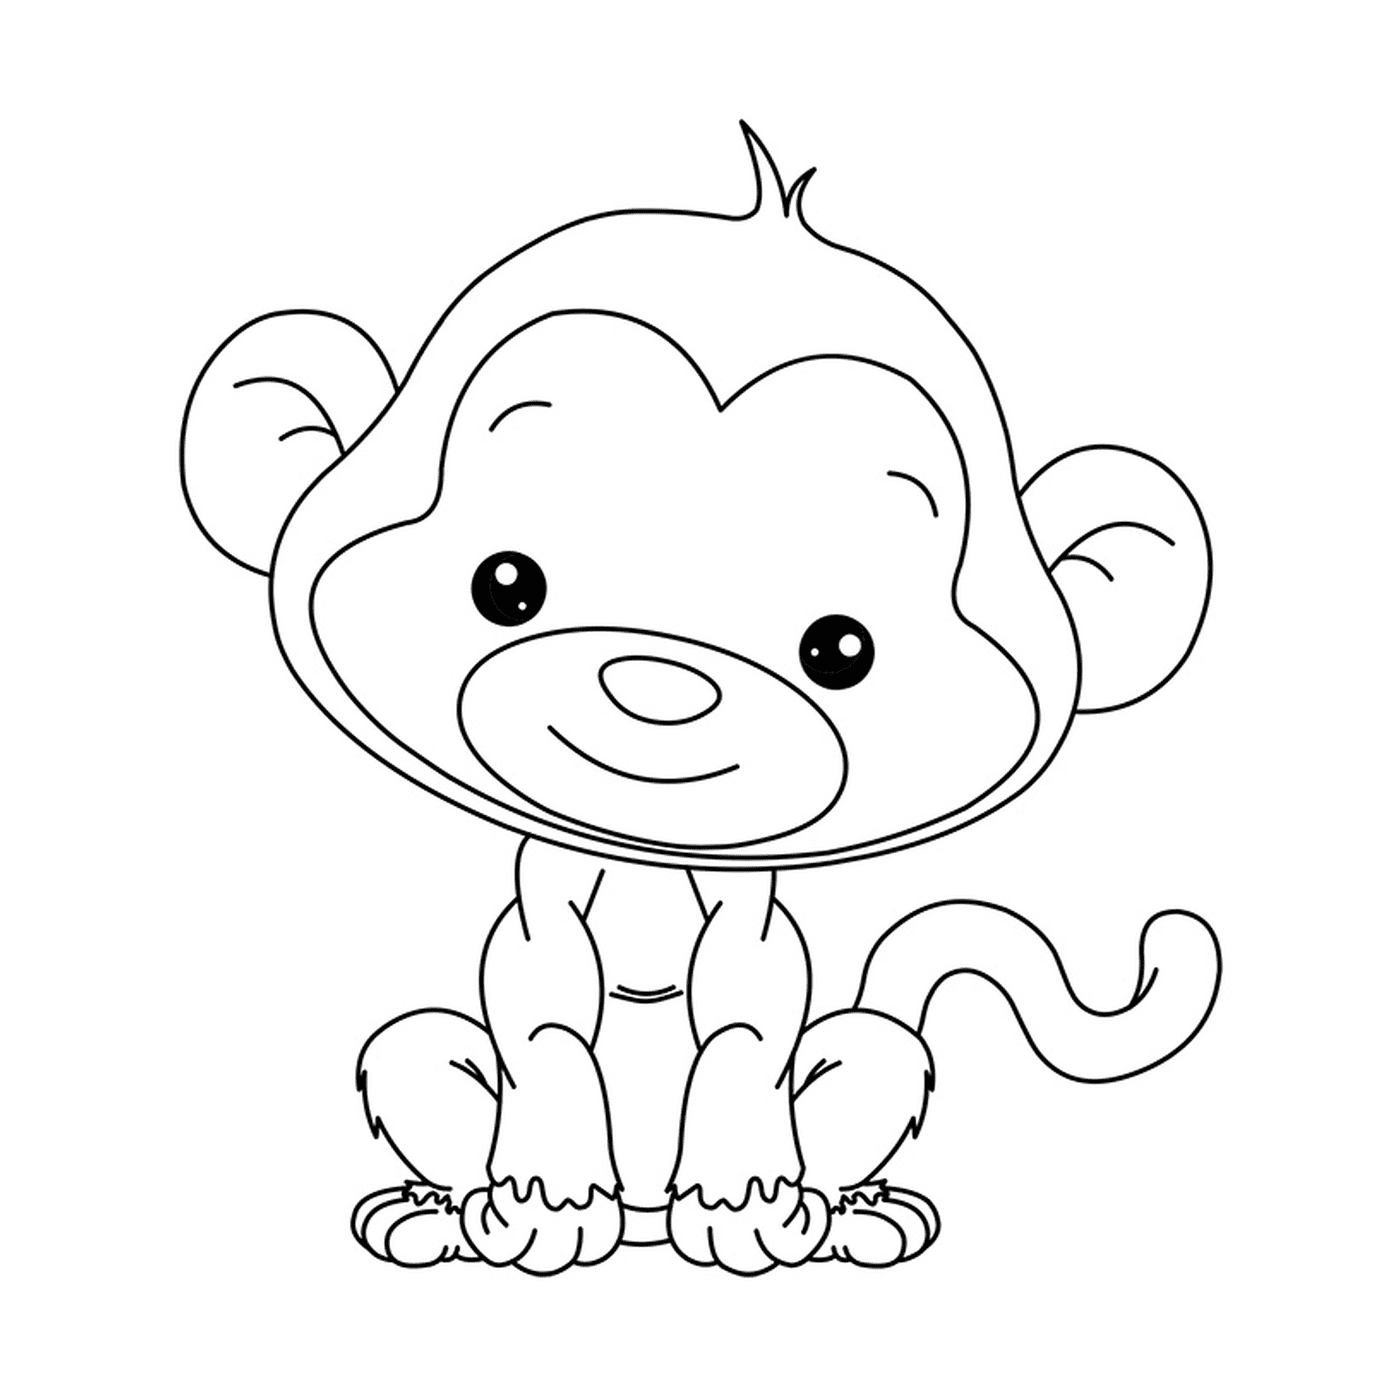  Nice little monkey 